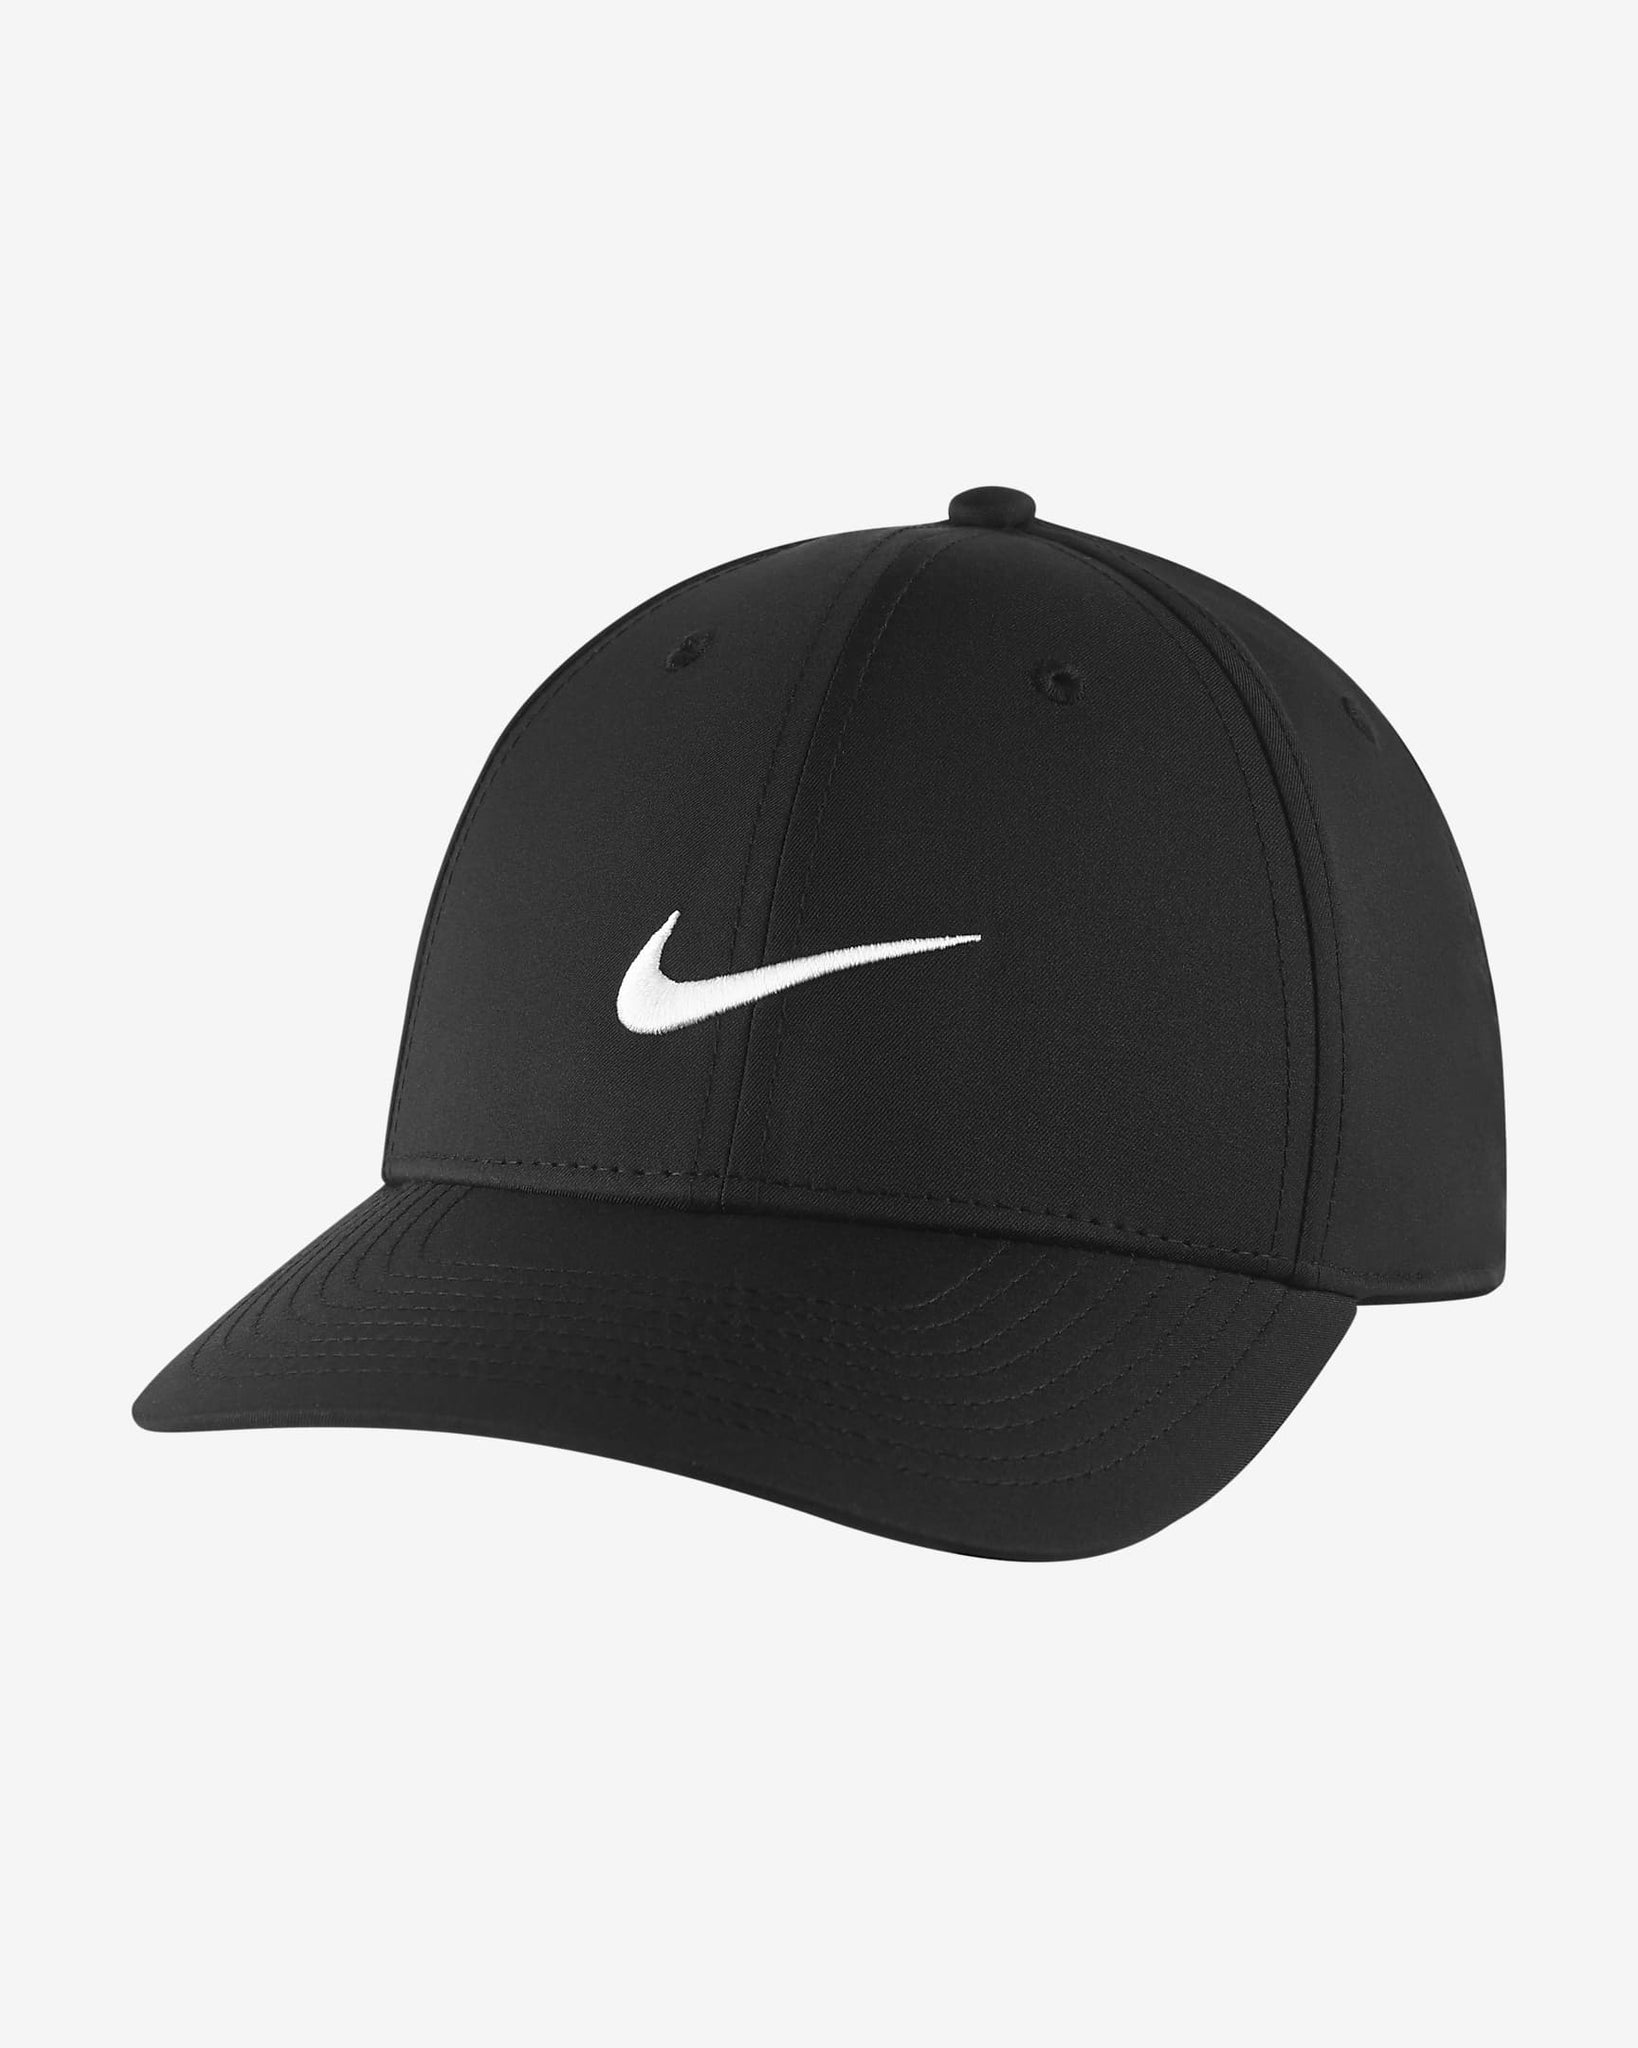 Nike Dri-FIT Hat/Cap